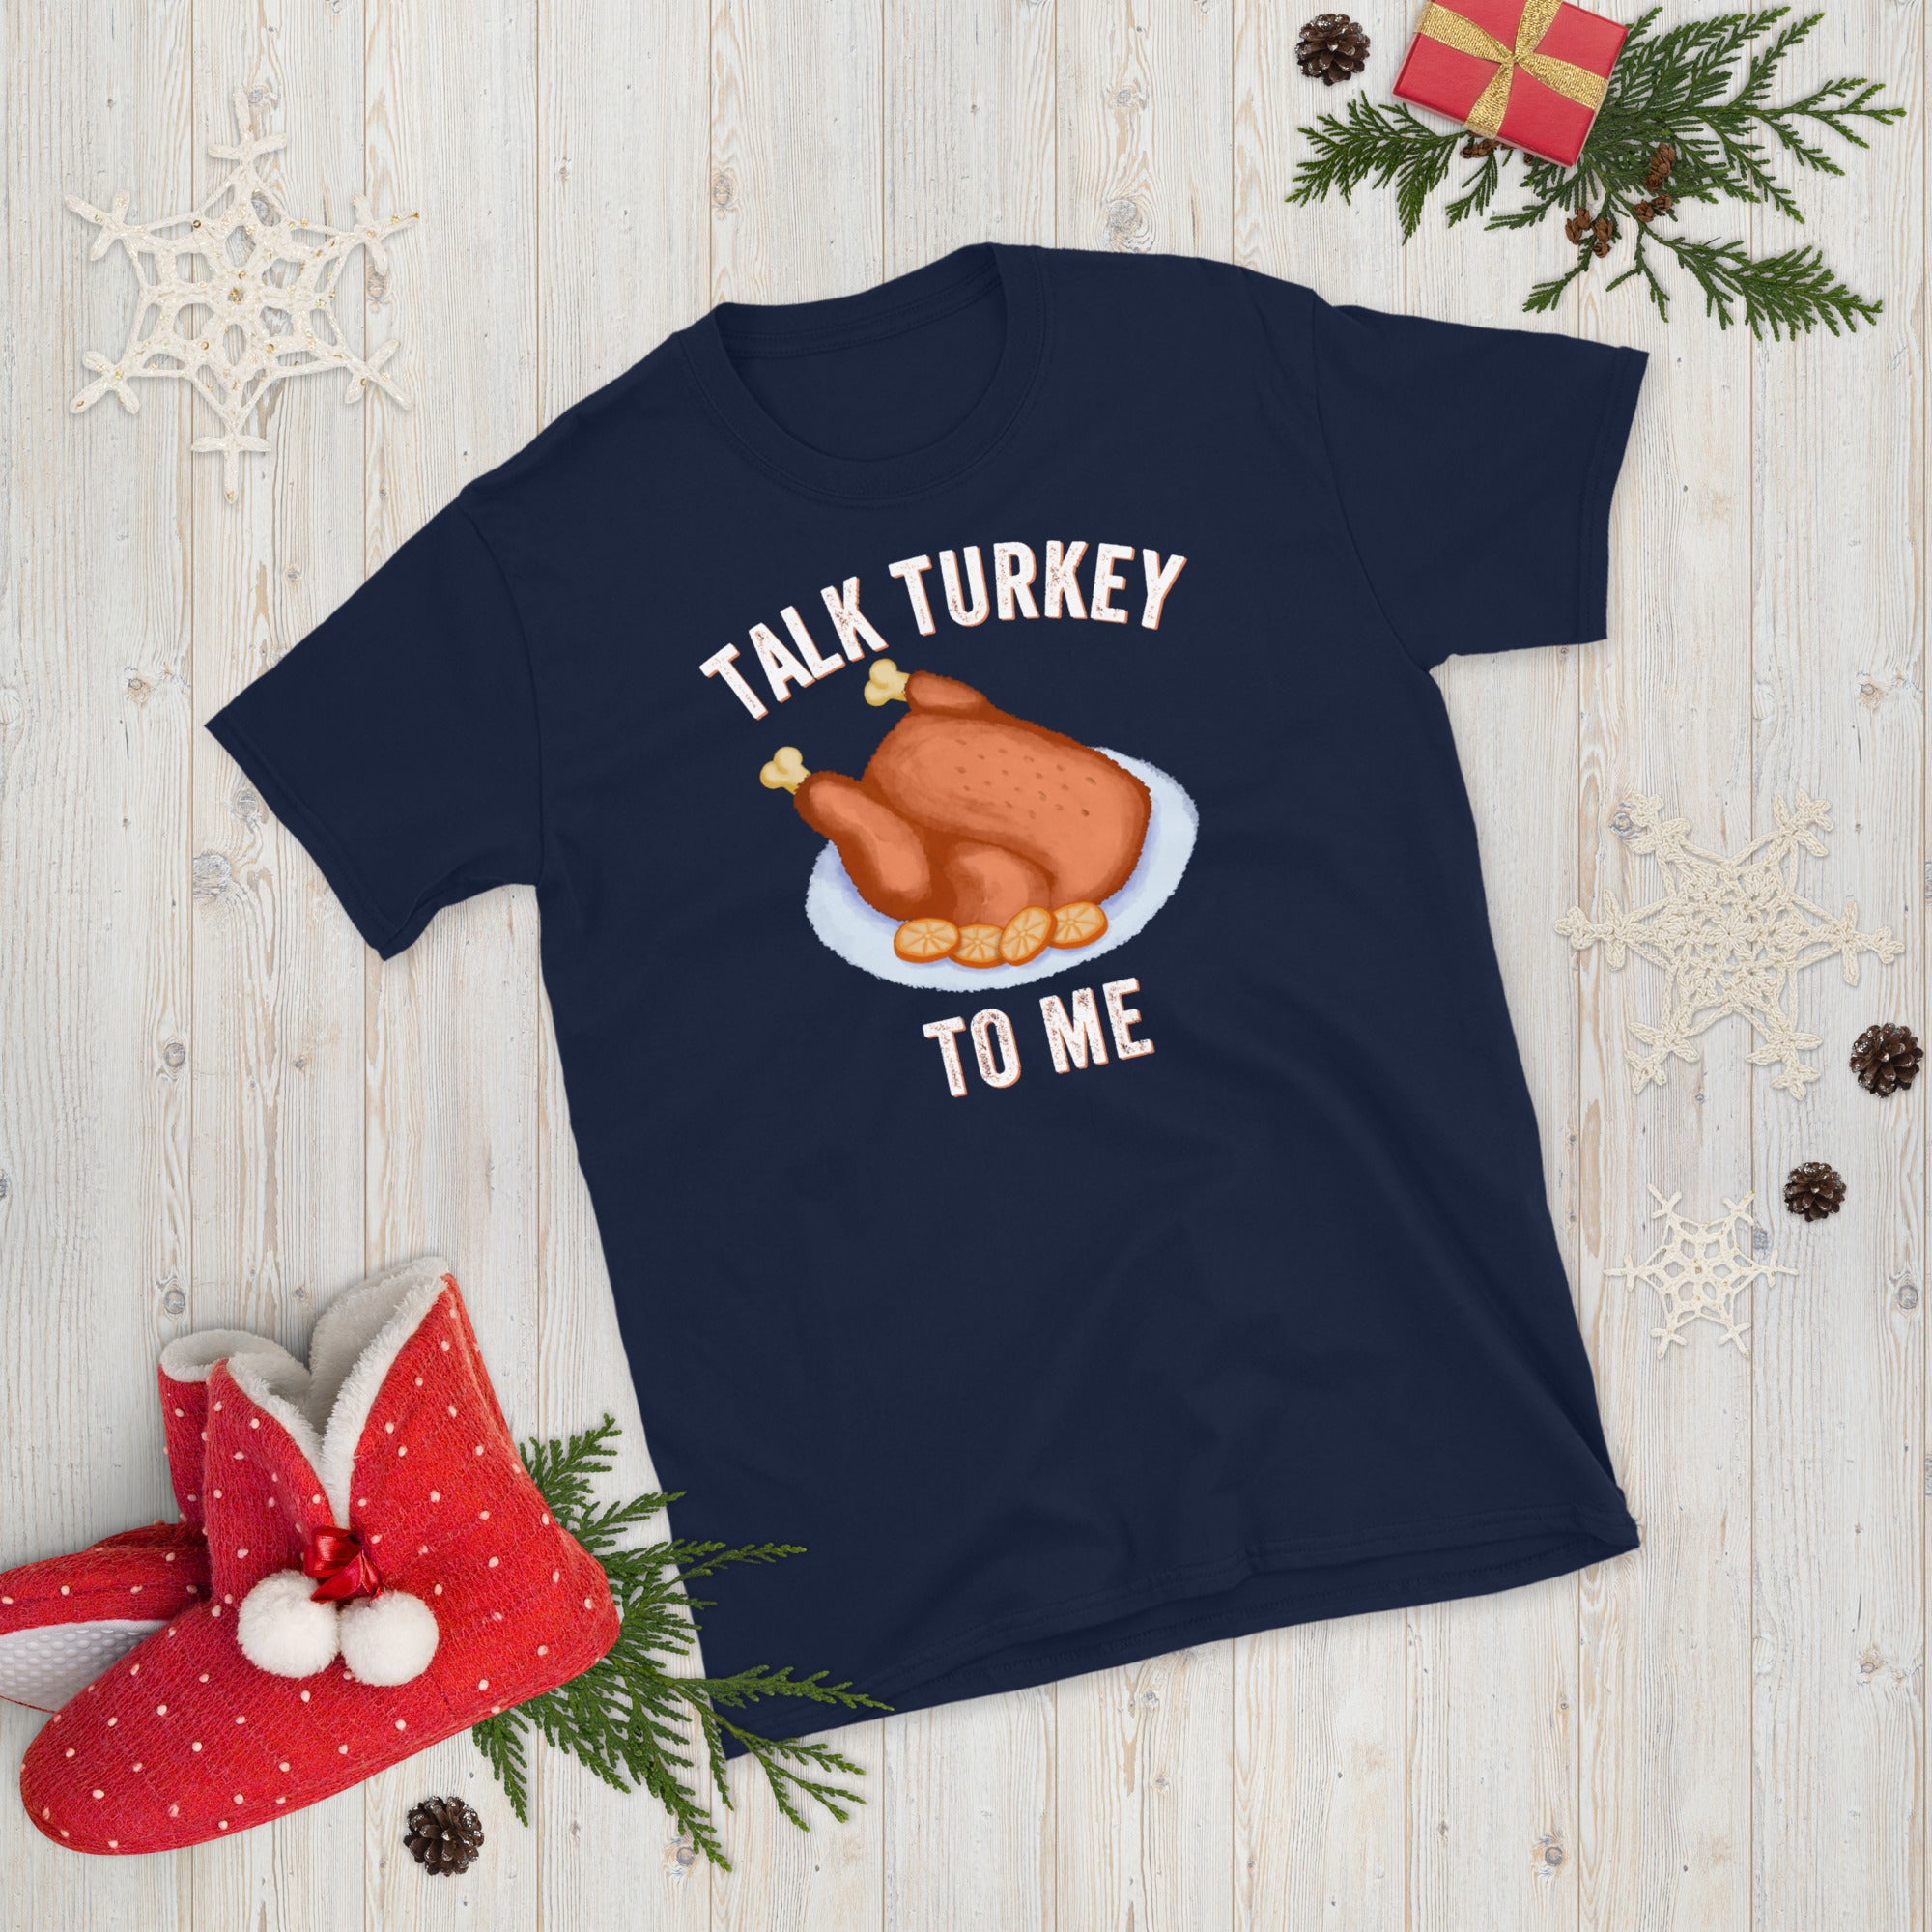 Talk Turkey To Me Shirt, Funny Thanksgiving, Thanksgiving Shirt, Turkey TShirt, Funny Mens Thanksgiving Shirt, Thanksgiving Shirt for Women - Madeinsea©